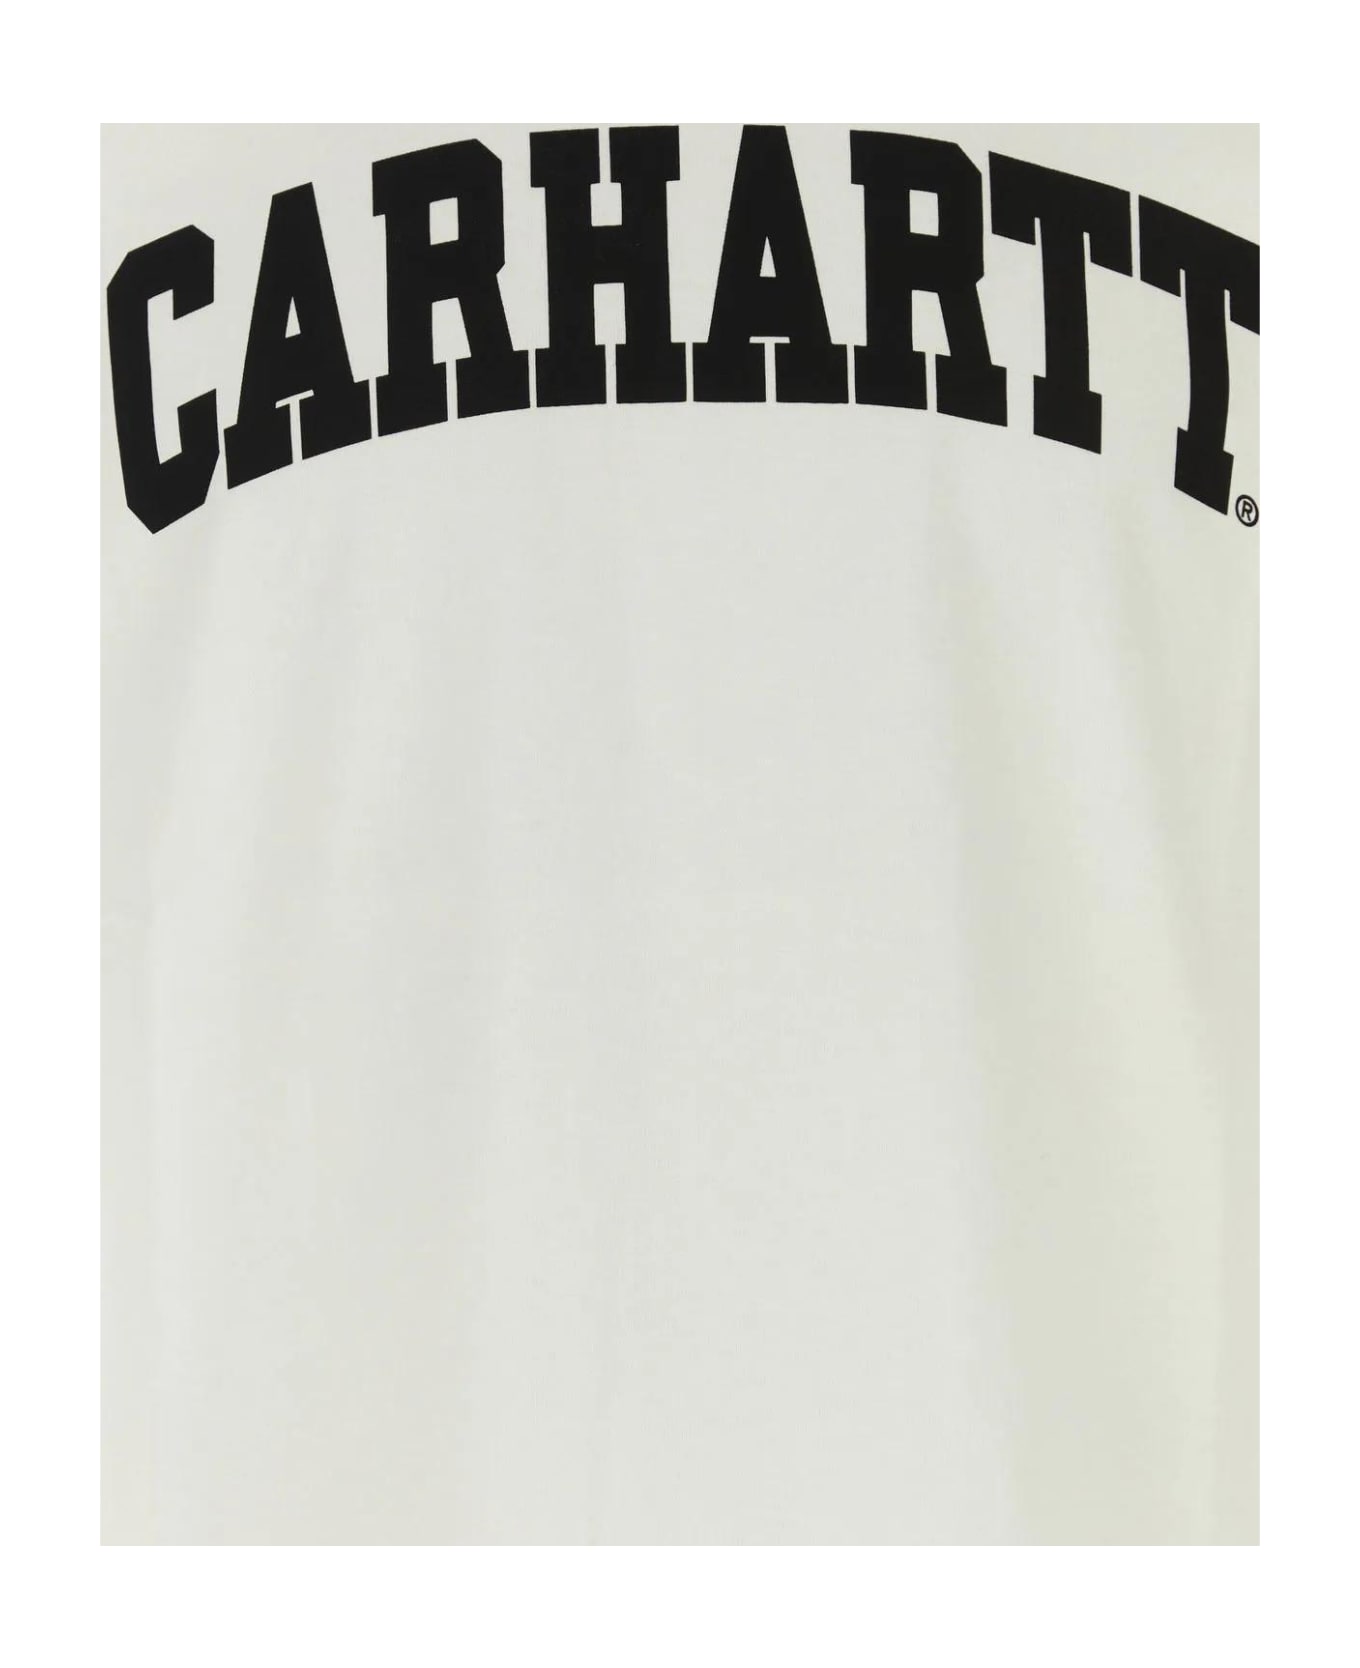 Carhartt White Cotton S/s University T-shirt - Bianco